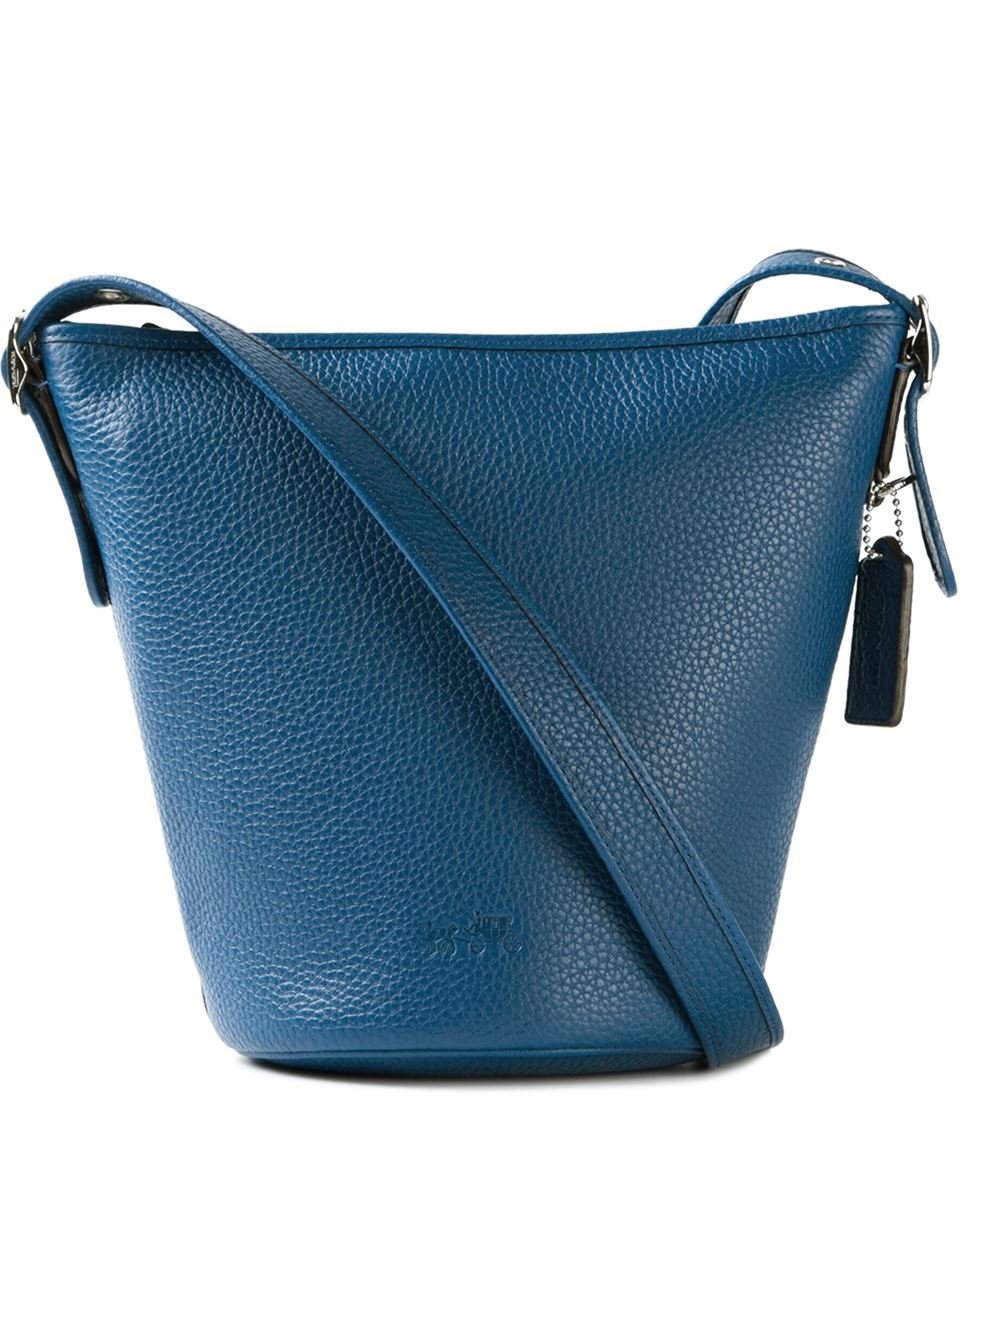 Lyst - Coach Mini Duffle Bag in Blue